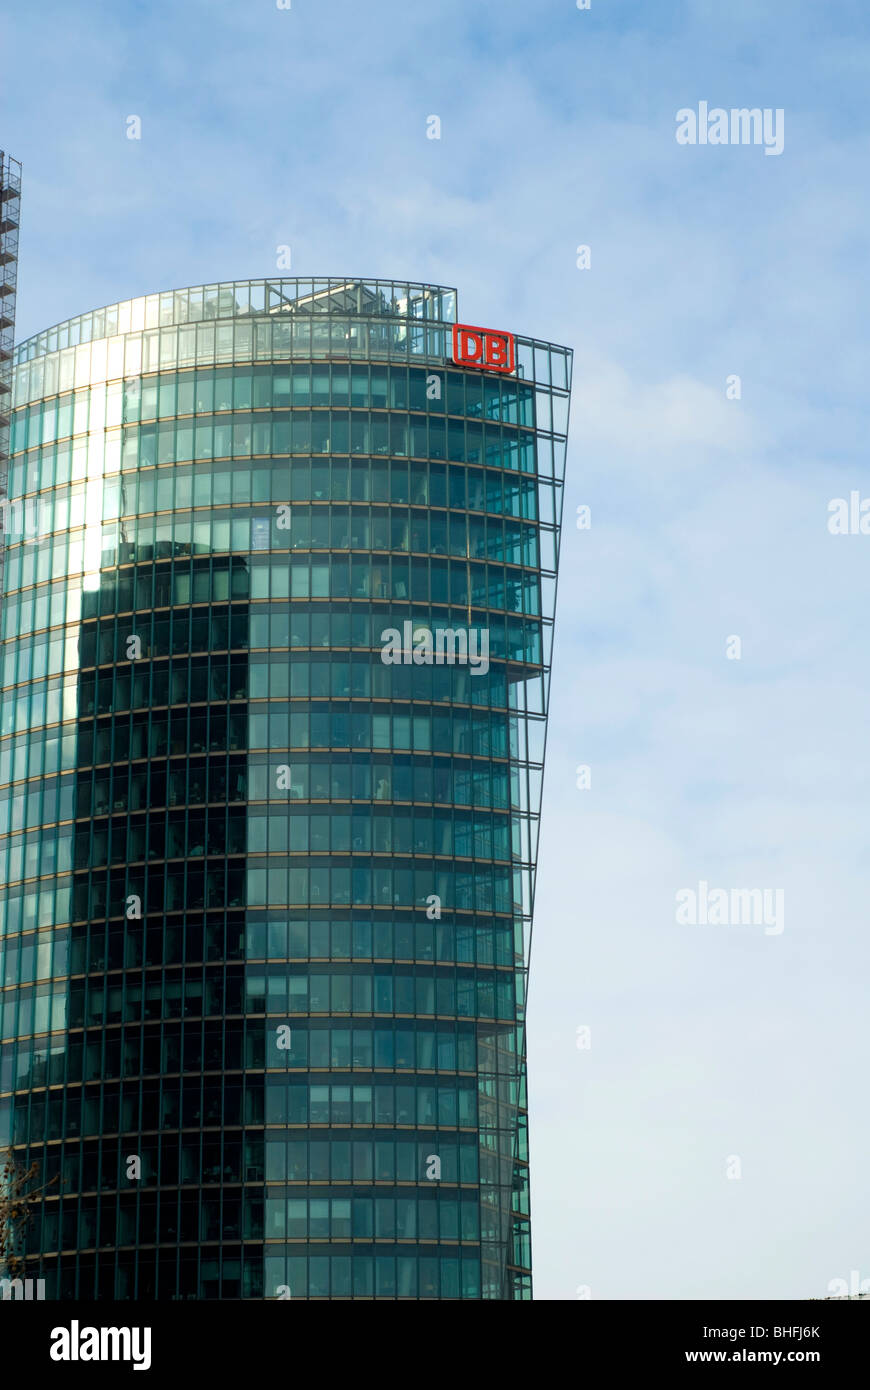 modern-glass-building-sony-center-potsdamer-platz-berlin-germany-europe-BHFJ6K.jpg